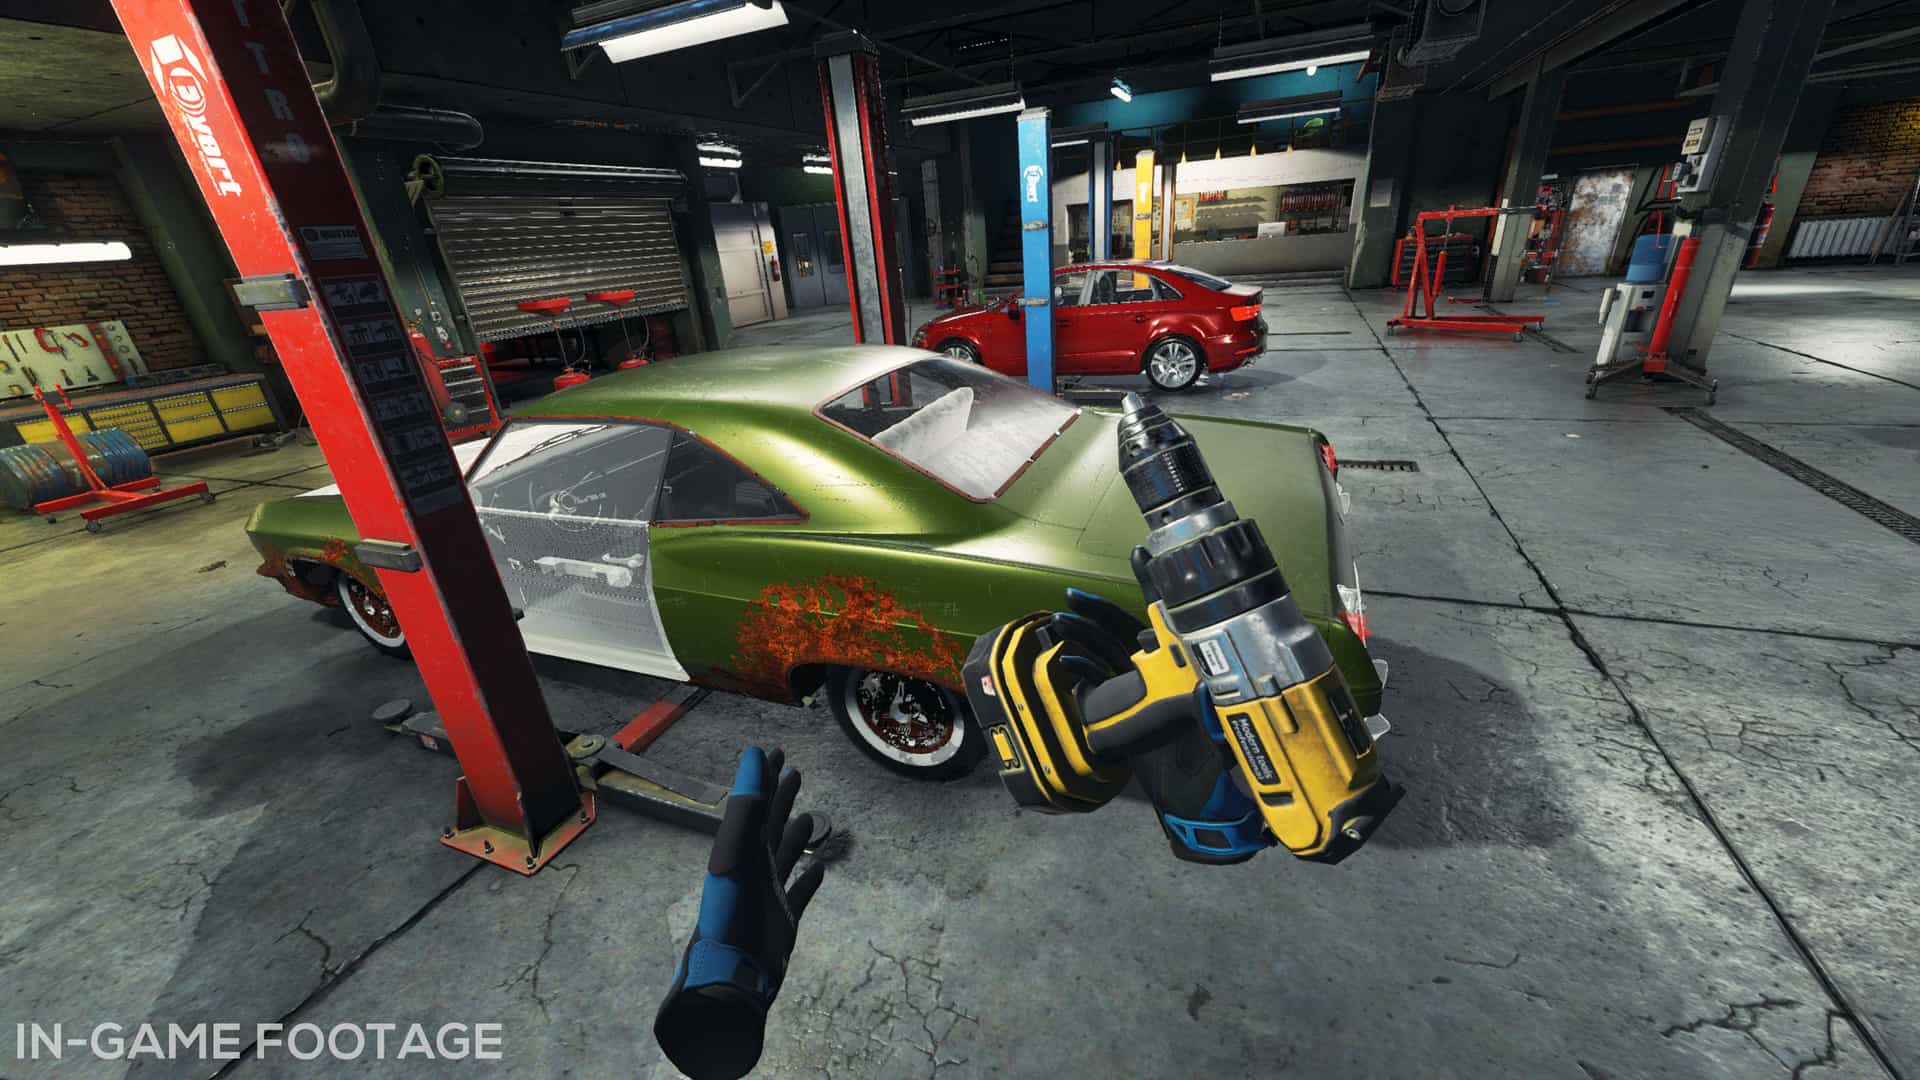 Car Parking Simulator VR on Steam